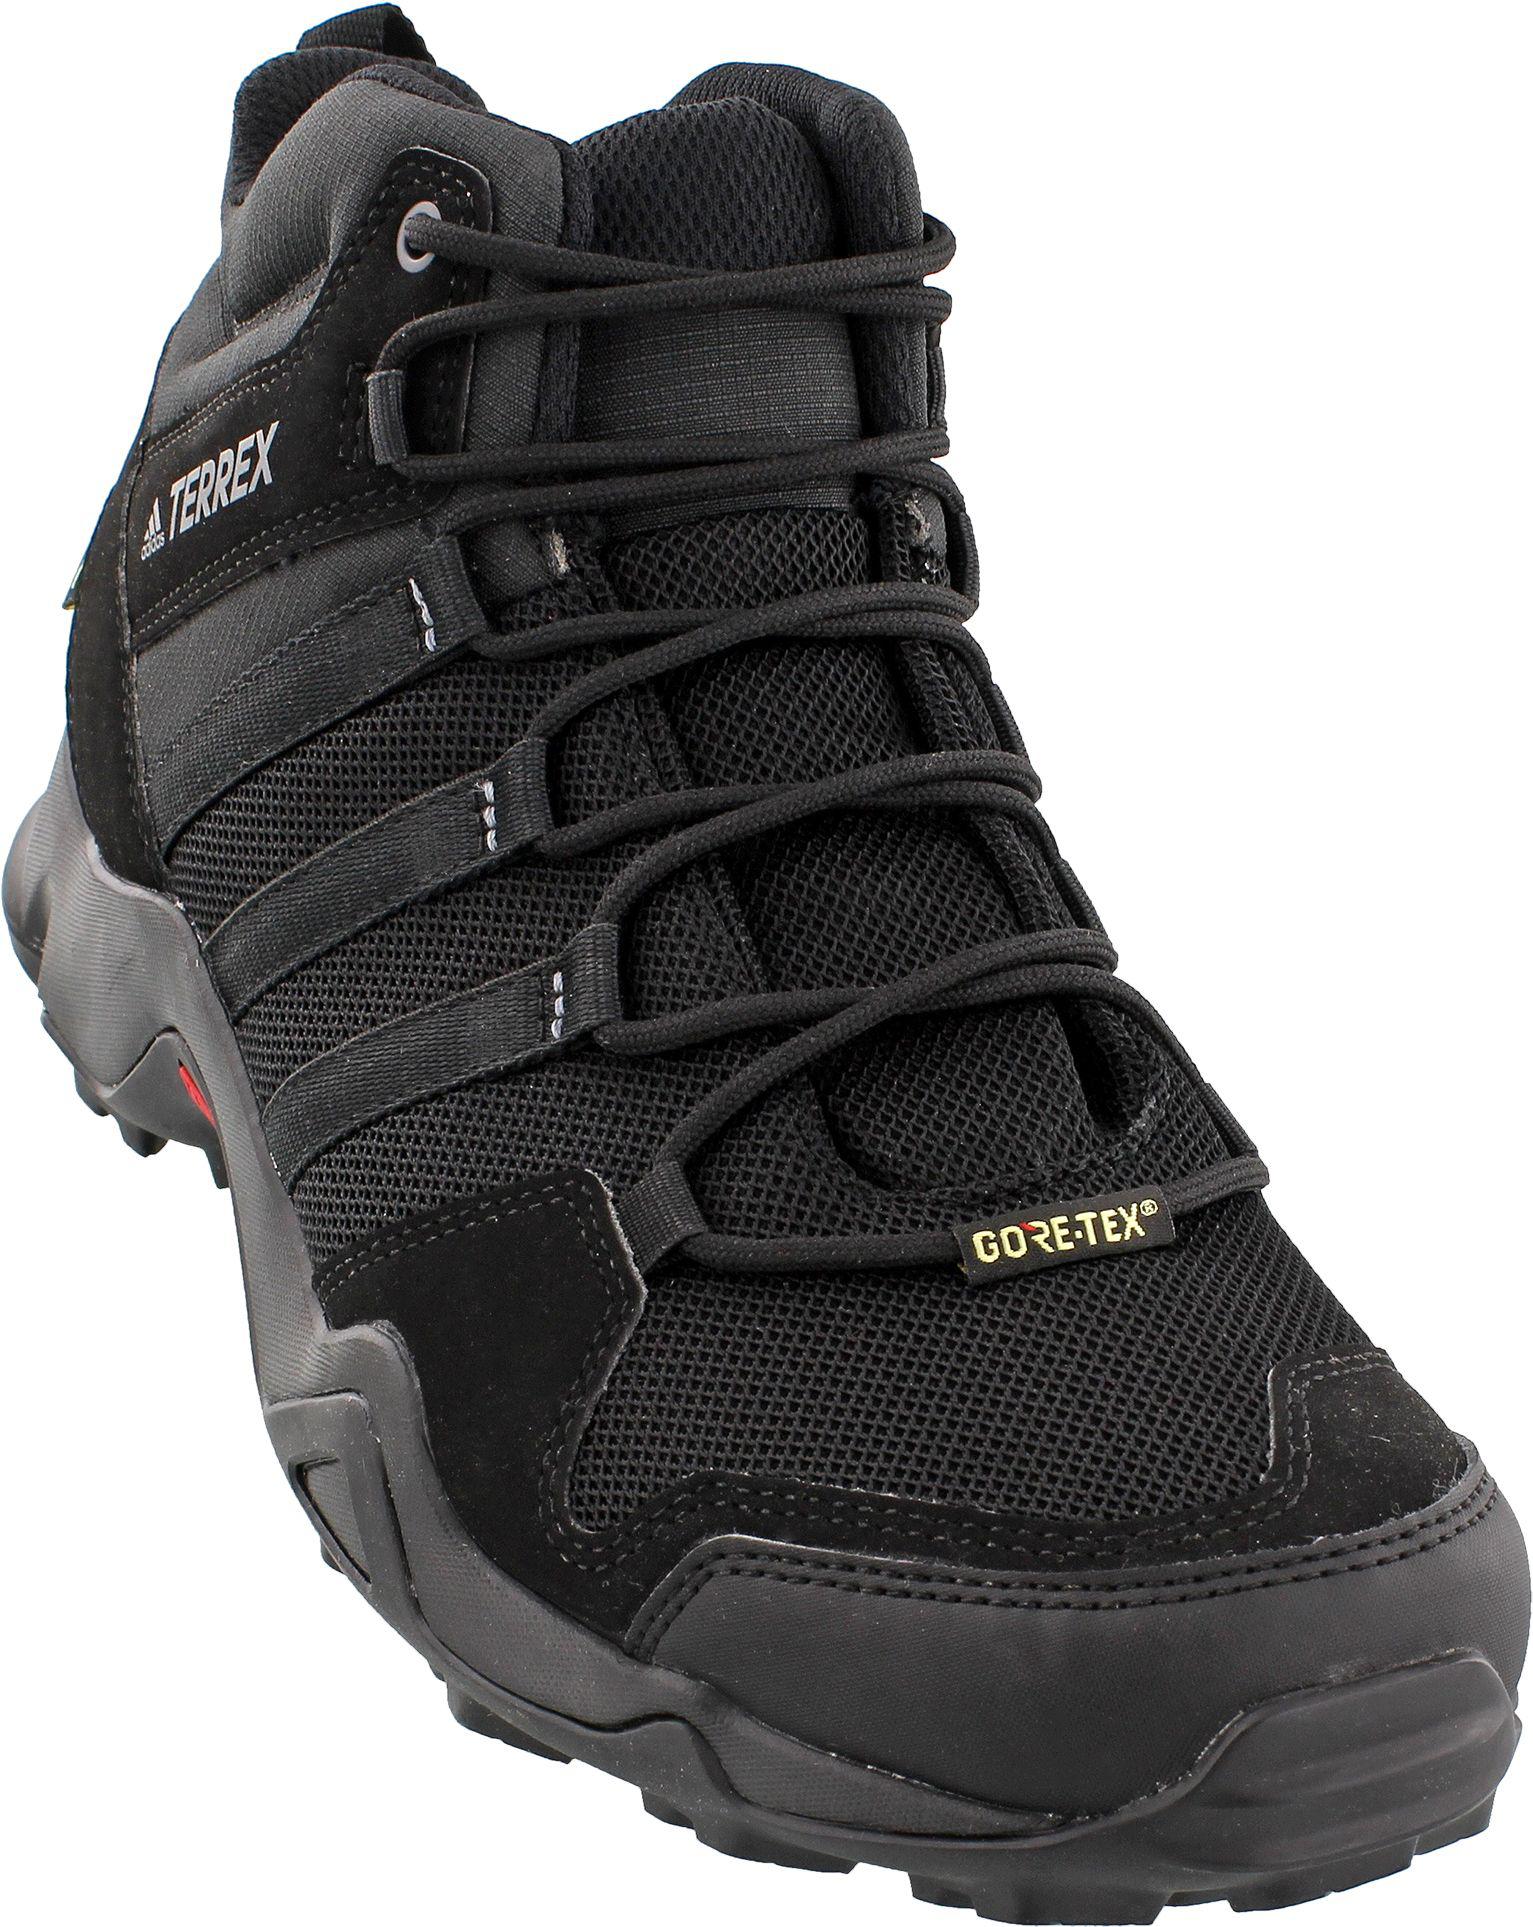 adidas outdoor terrex ax2r mid gtx men's waterproof hiking boots